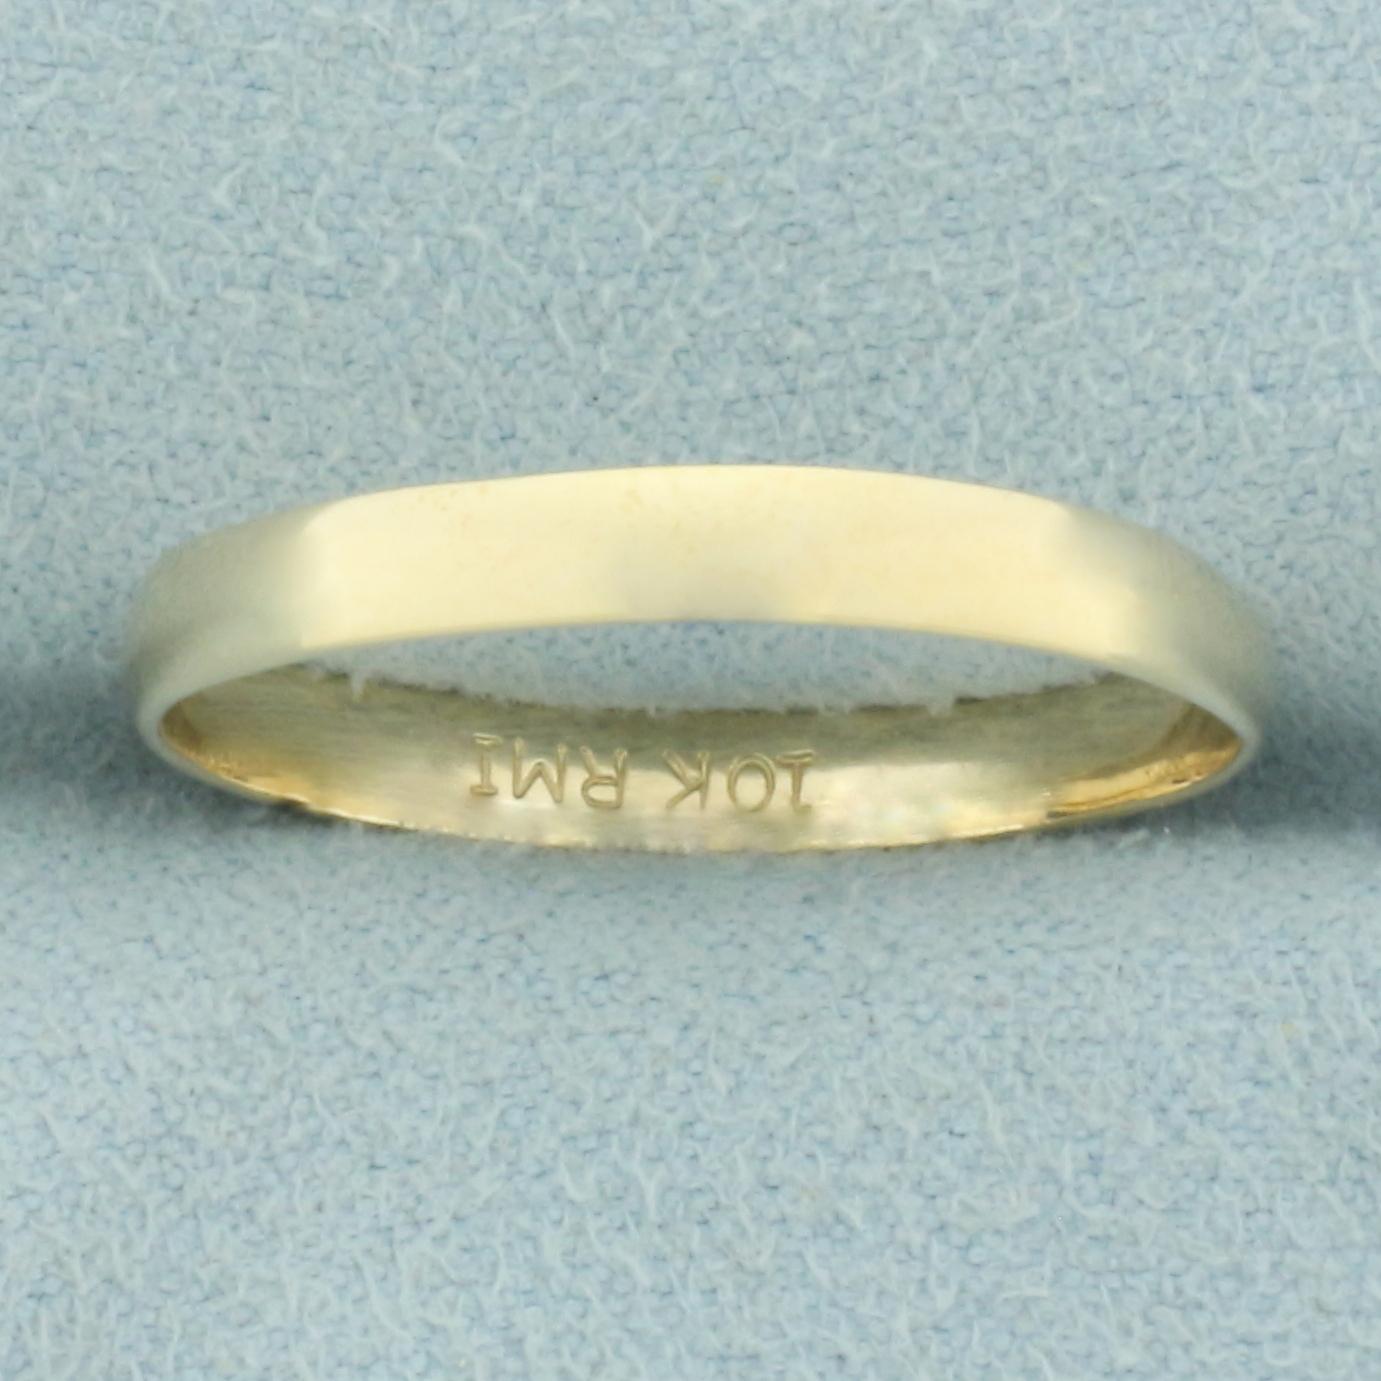 Mens High Polish Wedding Band Ring In 10k Yellow Gold